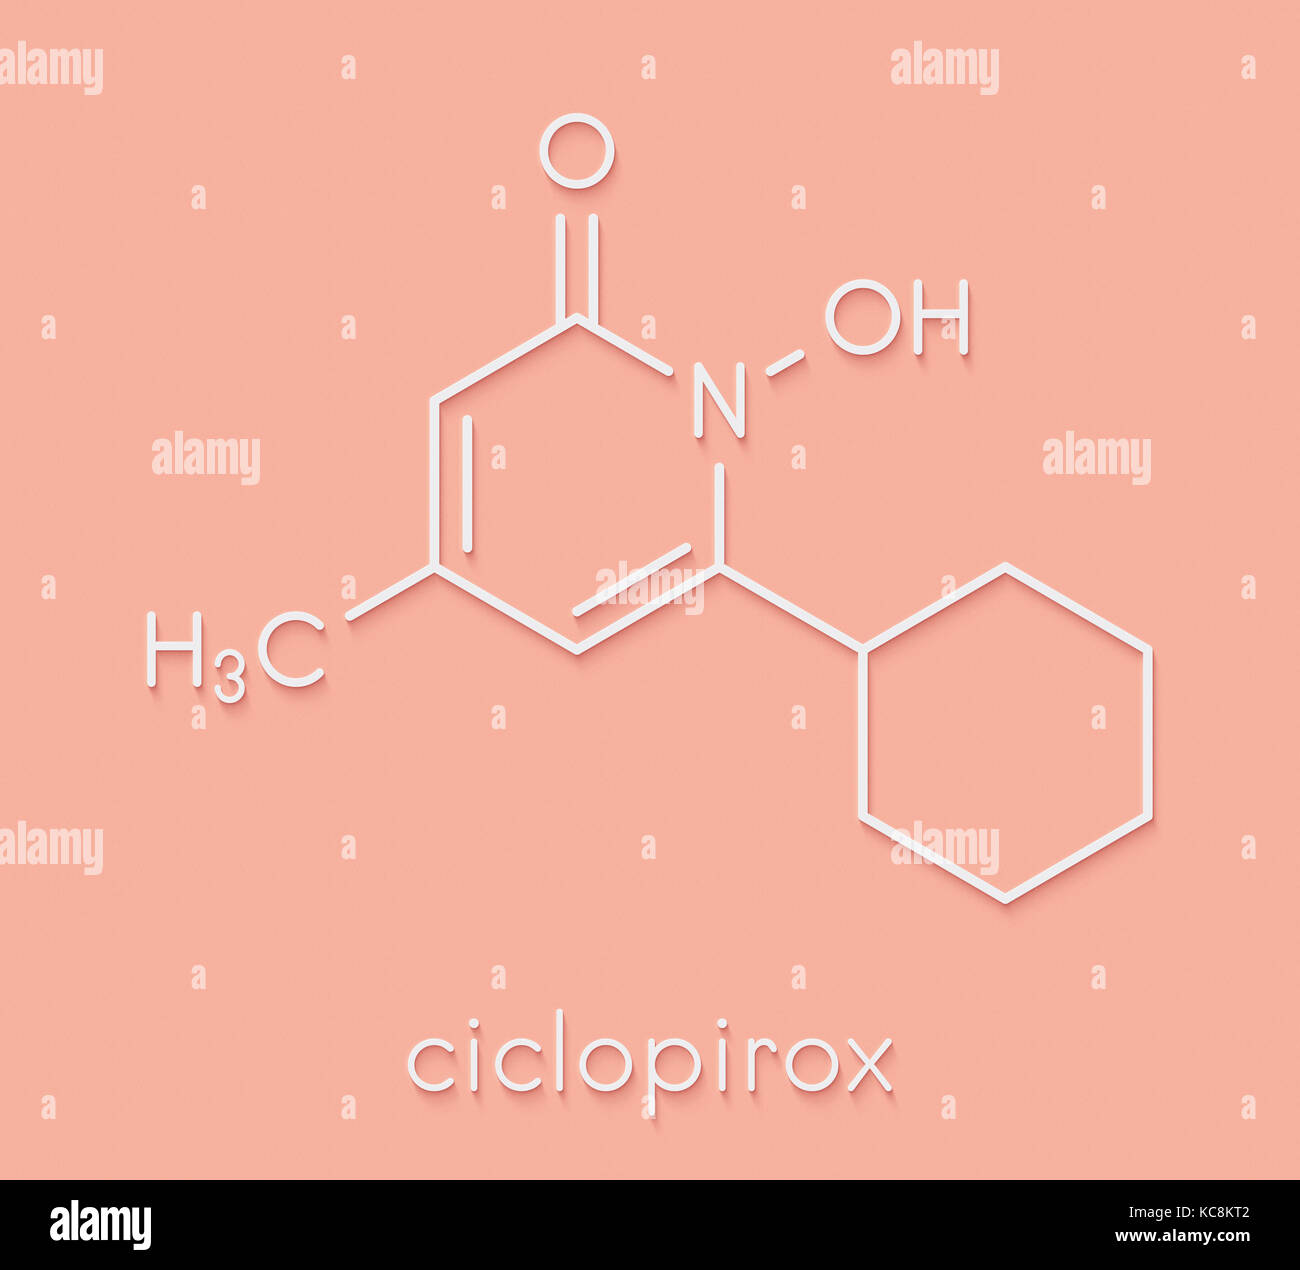 Ciclopirox antifungal drug molecule. Skeletal formula. Stock Photo